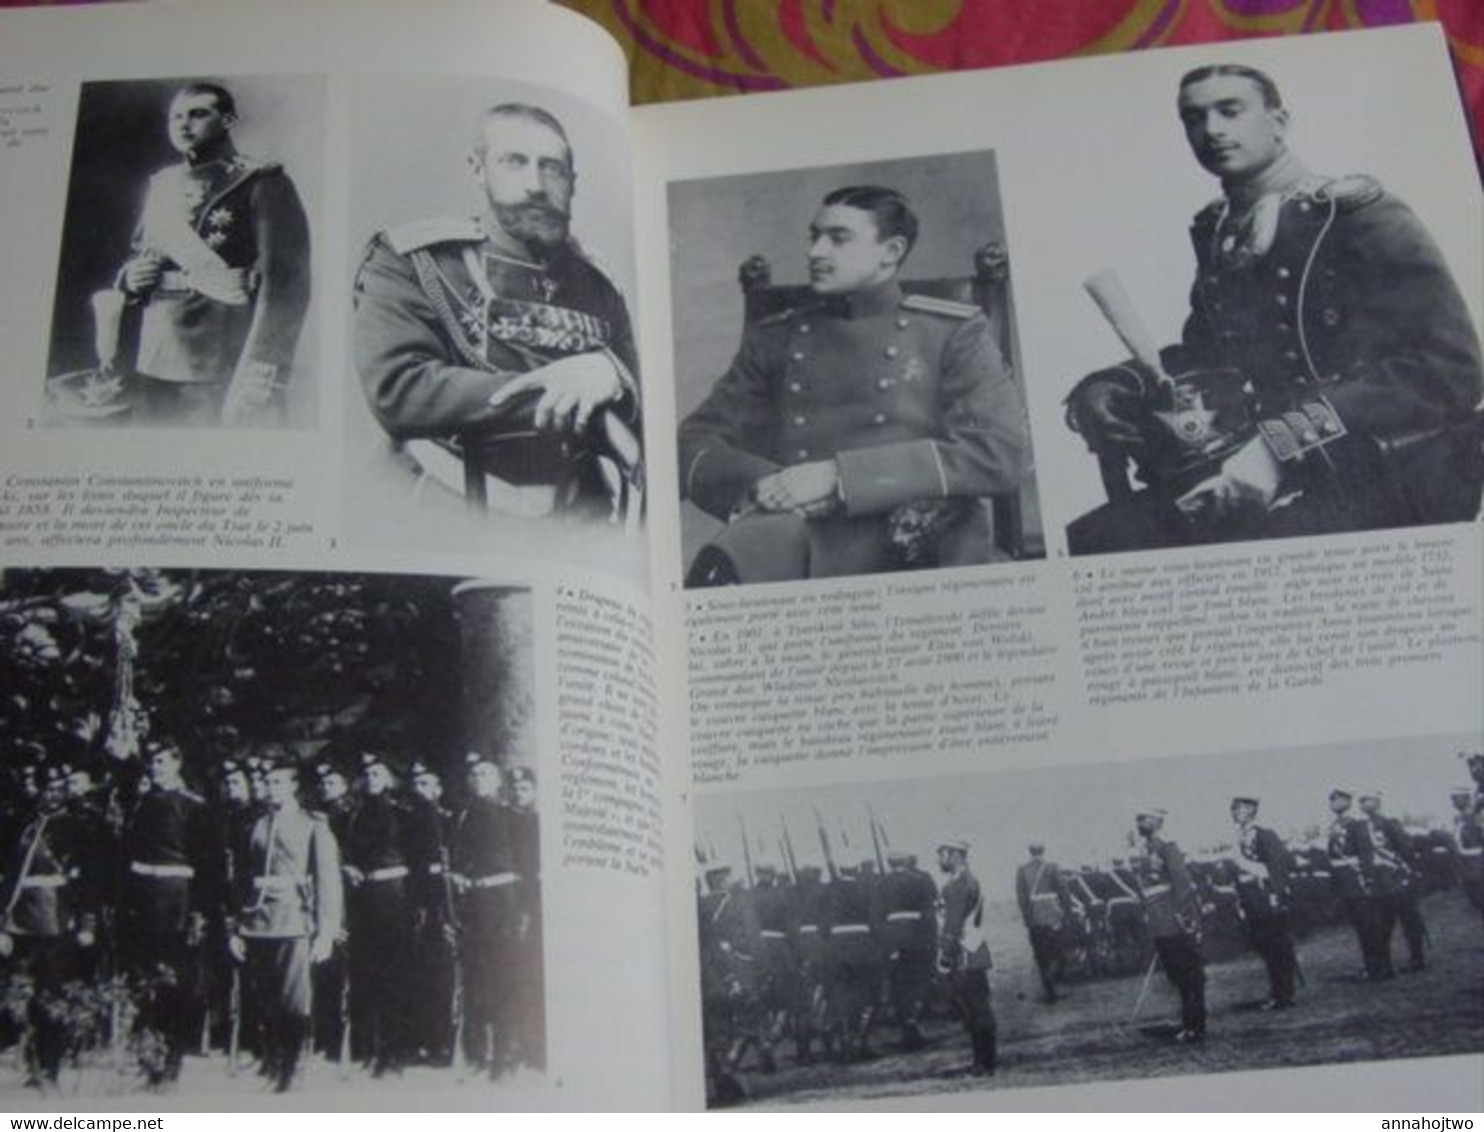 LA GARDE IMPÉRIALE RUSSE 1896-1914-De Gmeline-Gorokhoff - Russie des Tsars,Nicolas II & sa Garde-Uniformes & Décorations